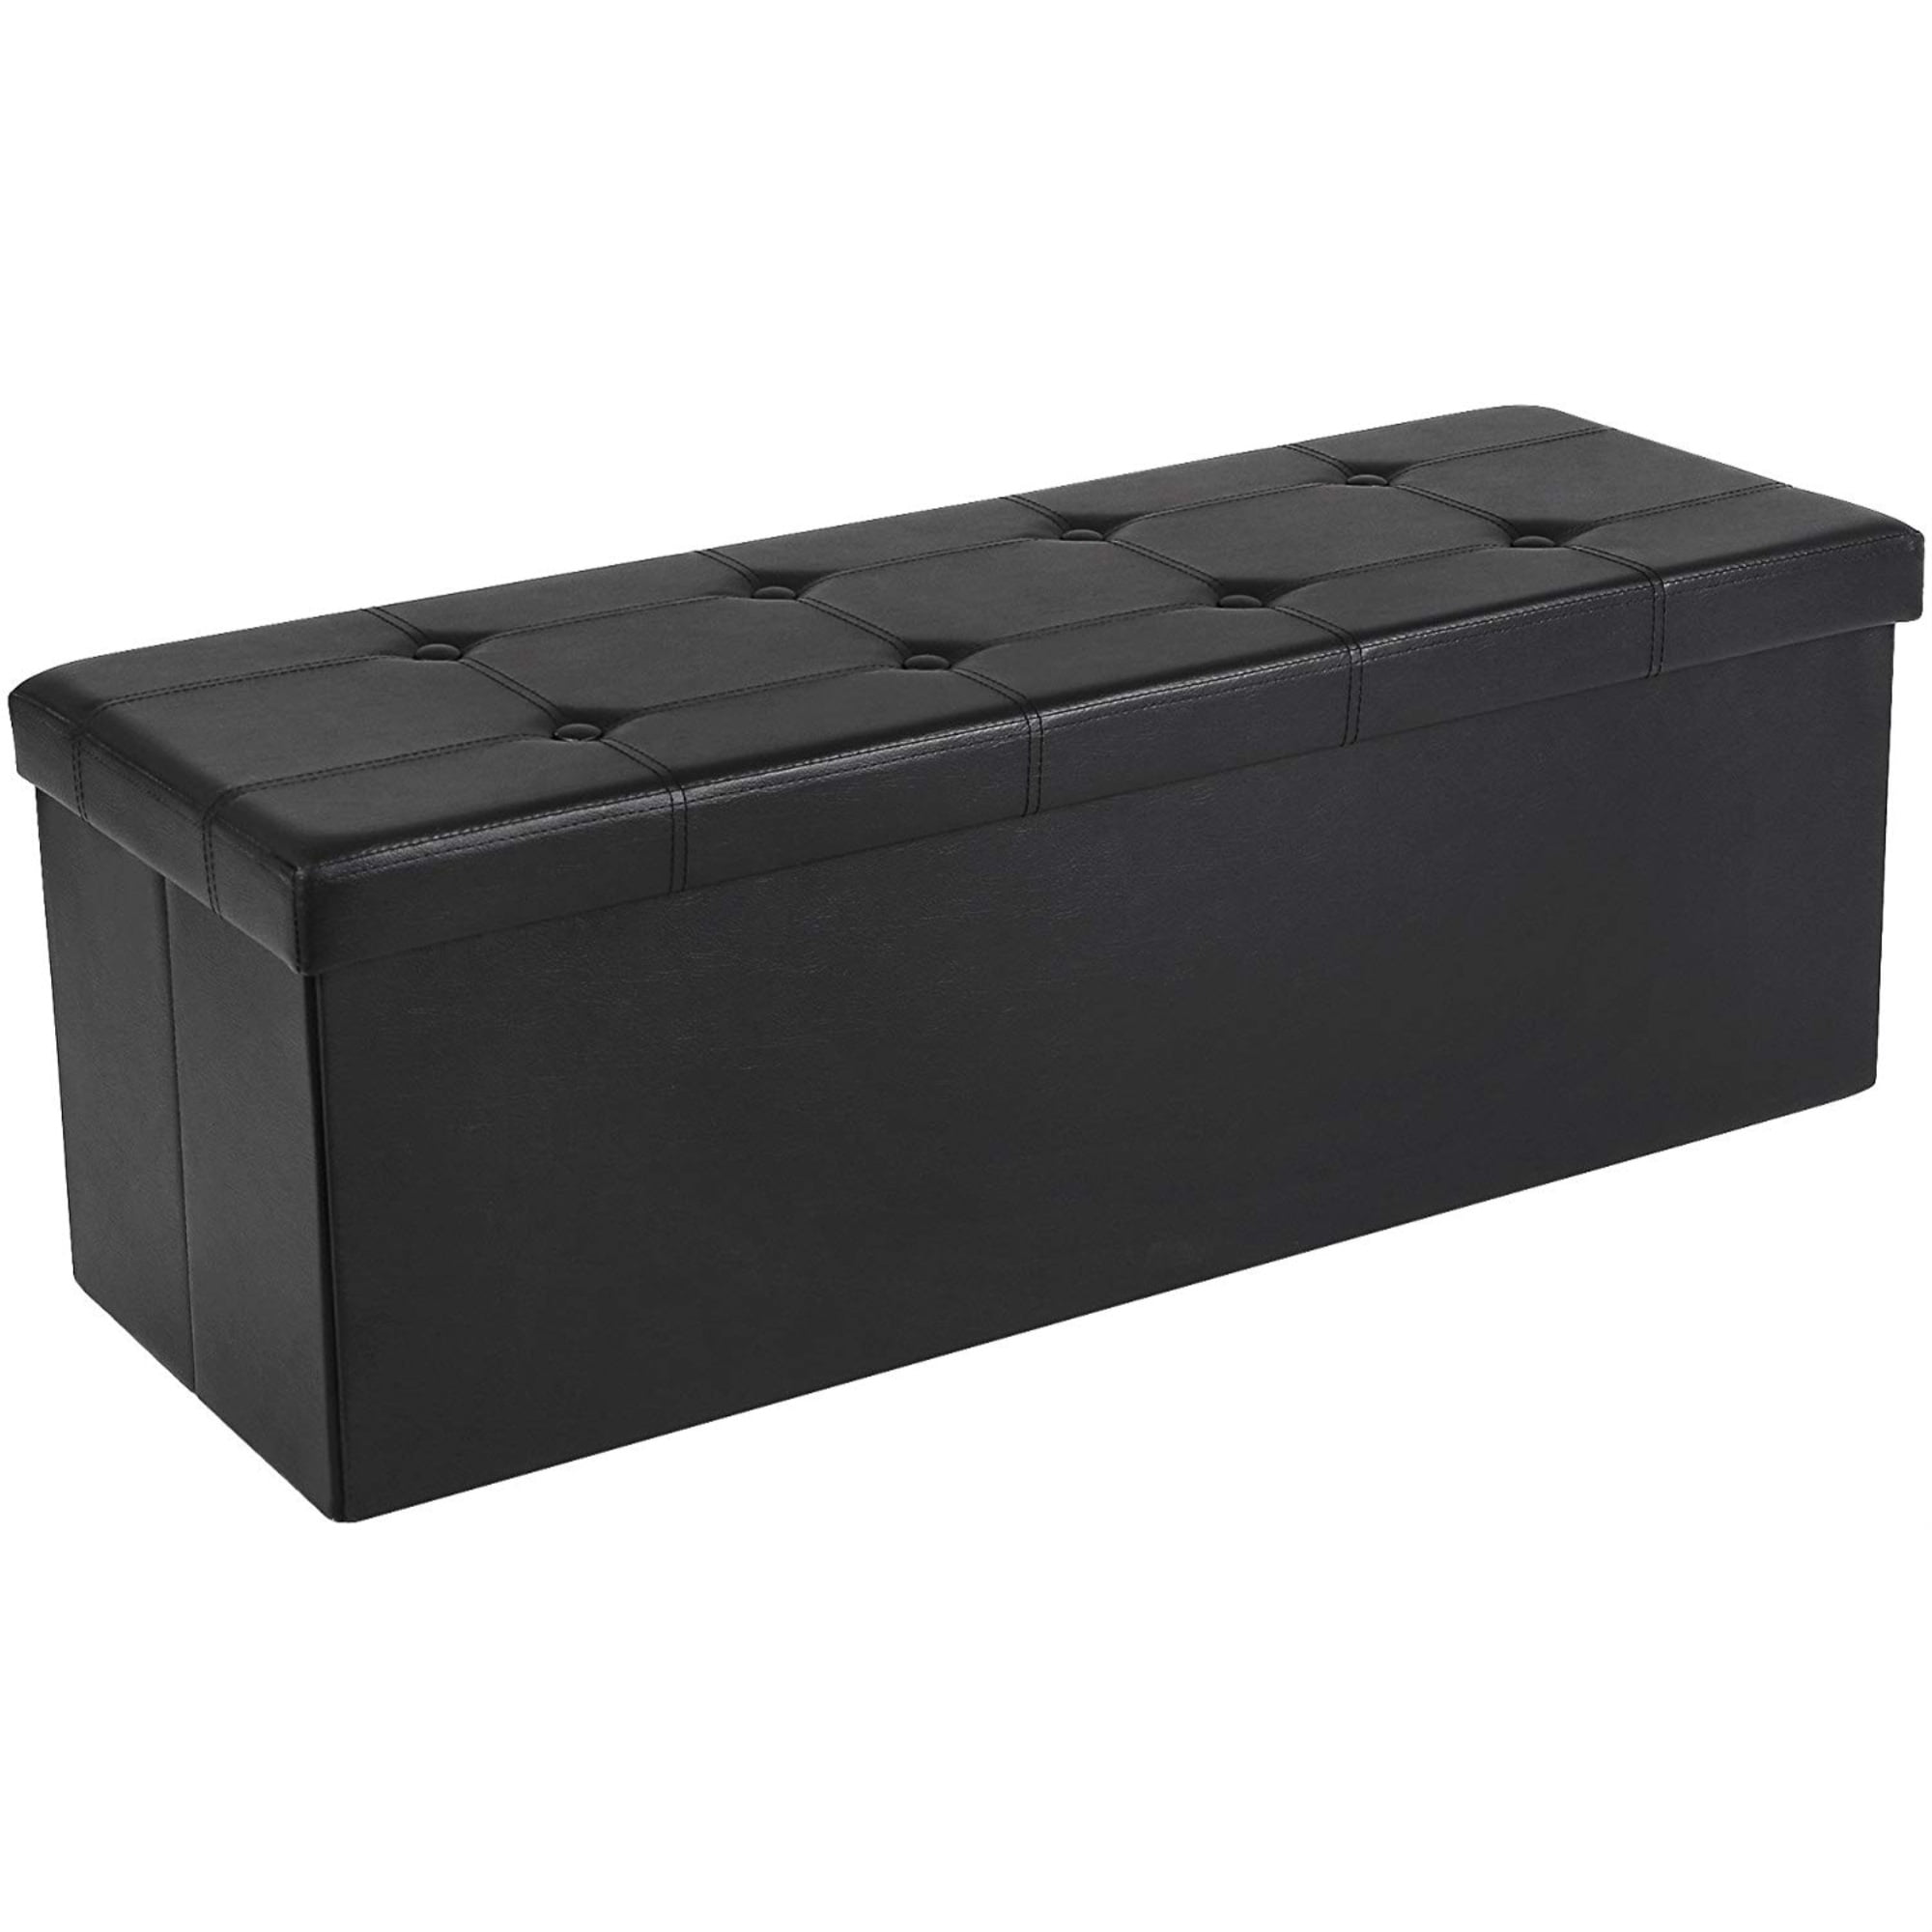 Button Tufted Rectangular Foldable Storage Ottoman Bench, Black ...